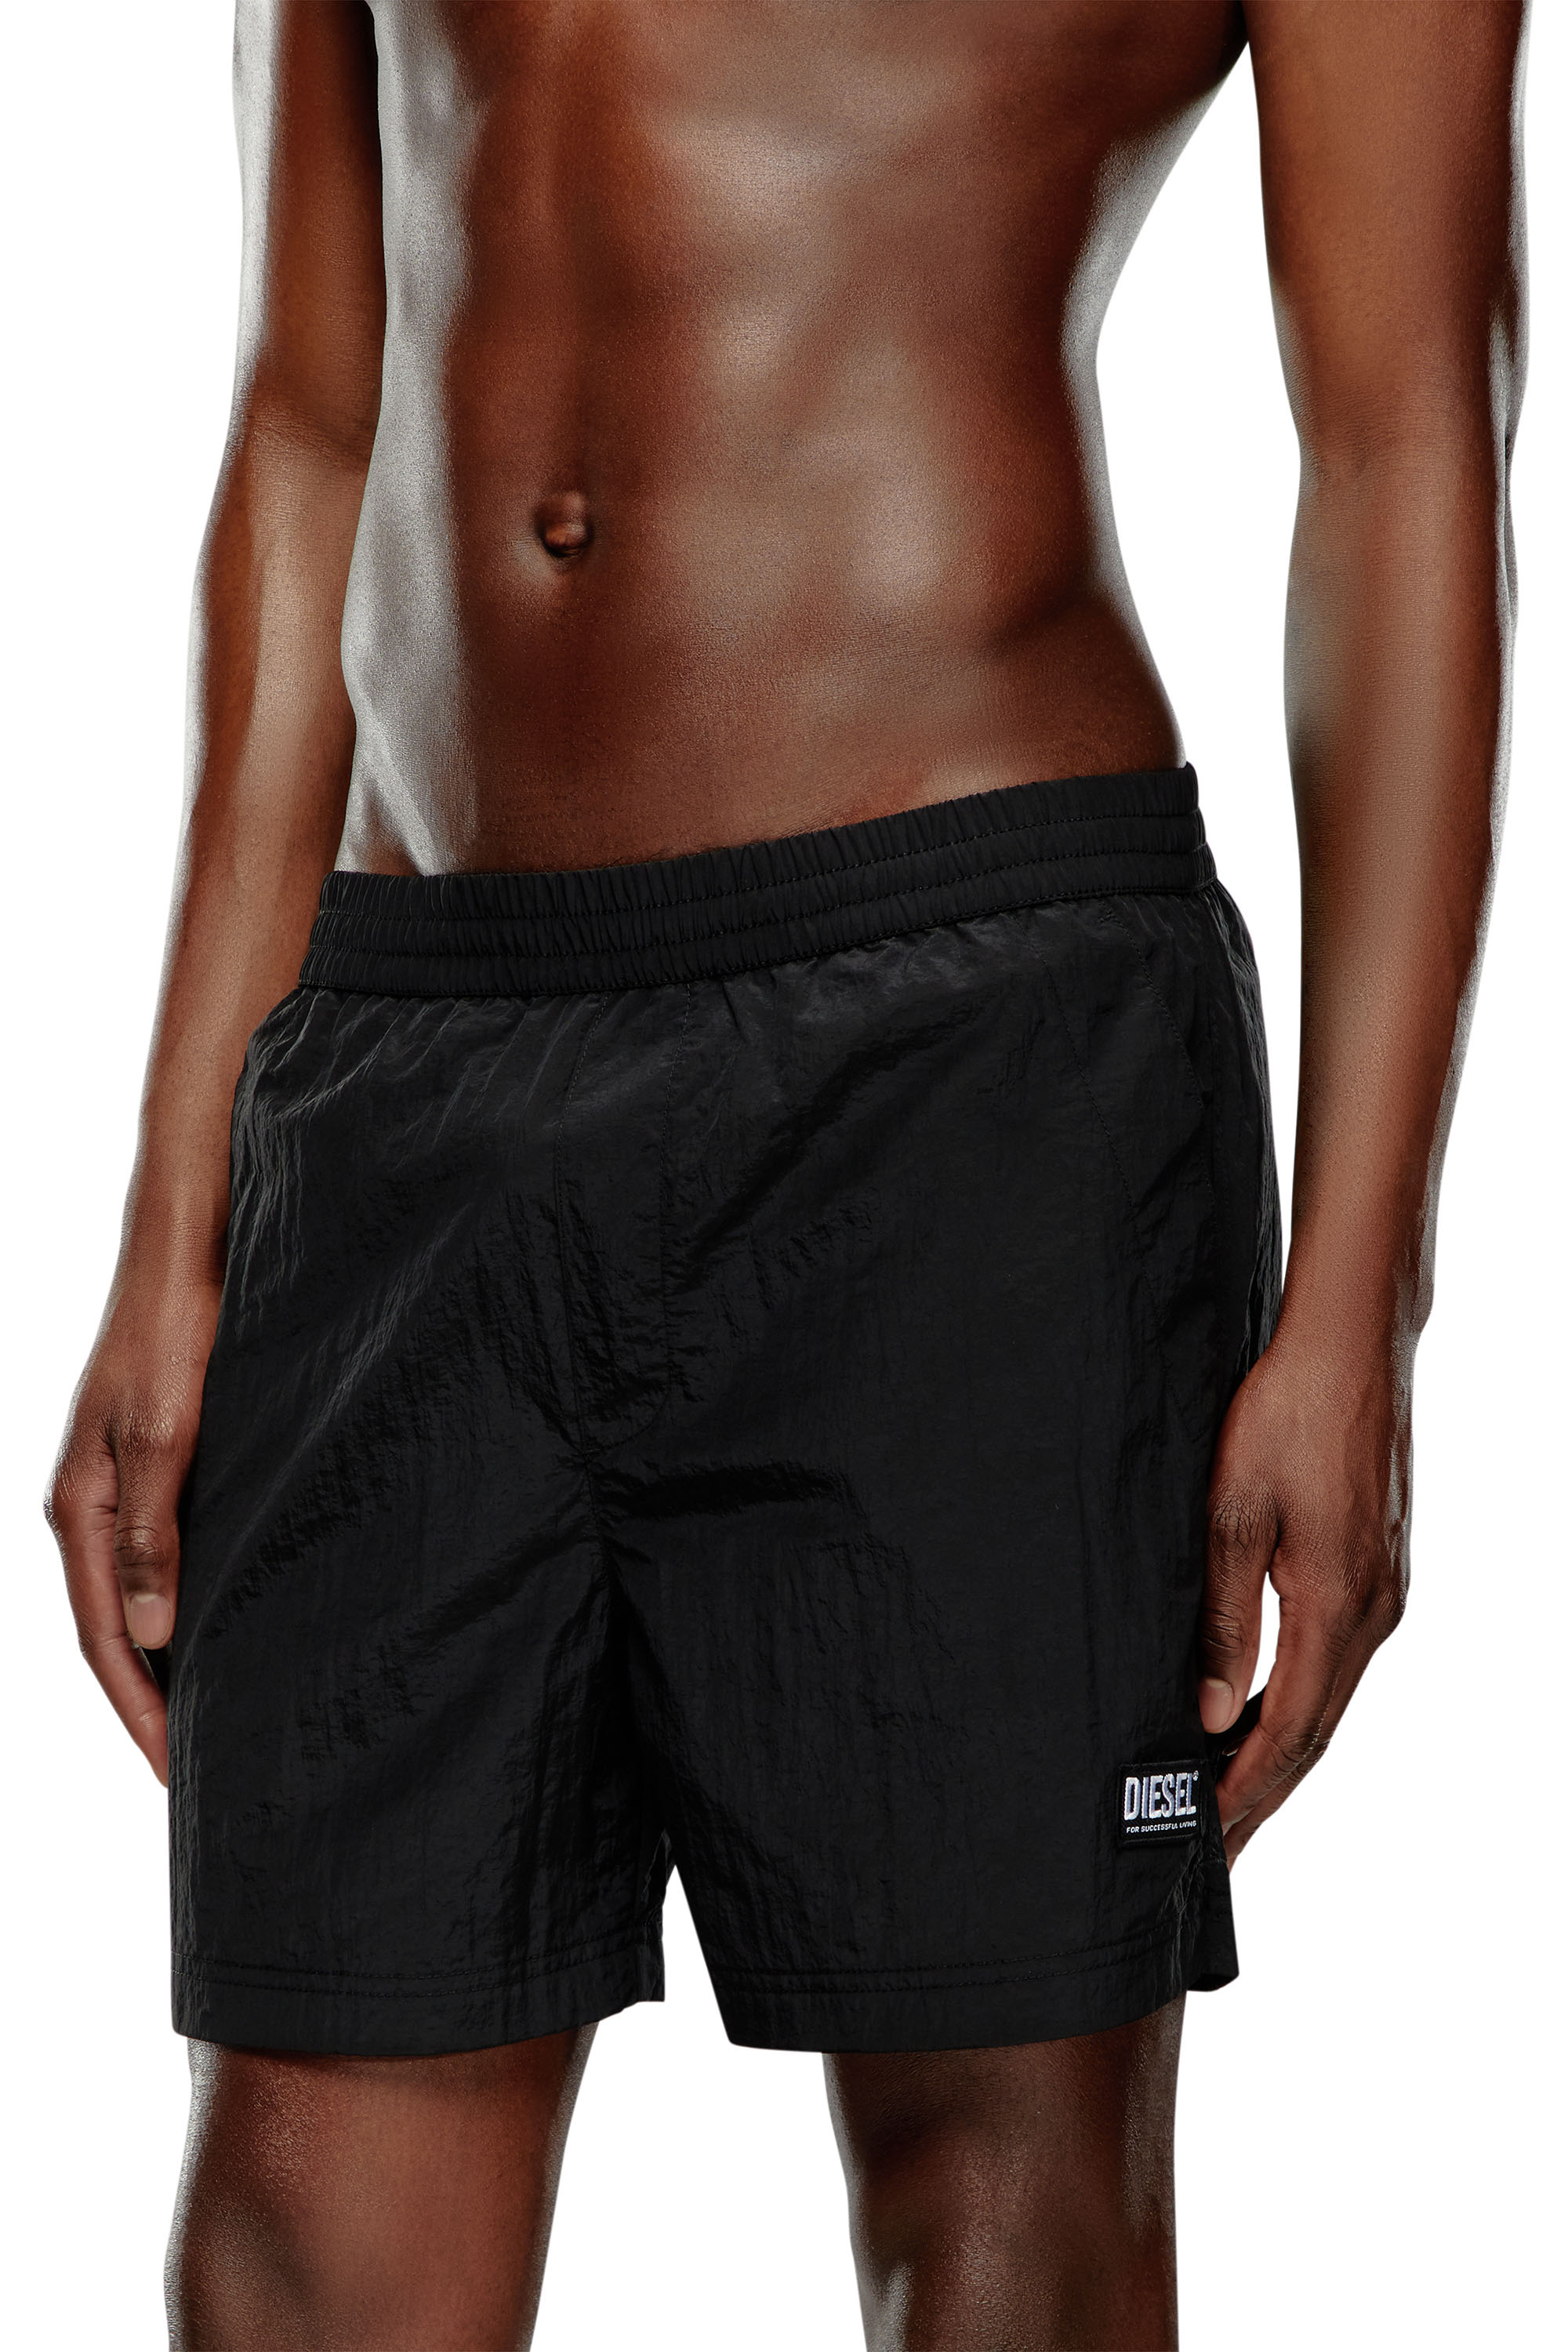 Diesel - Board shorts in crinkled fabric - Boardshorts - Man - Black